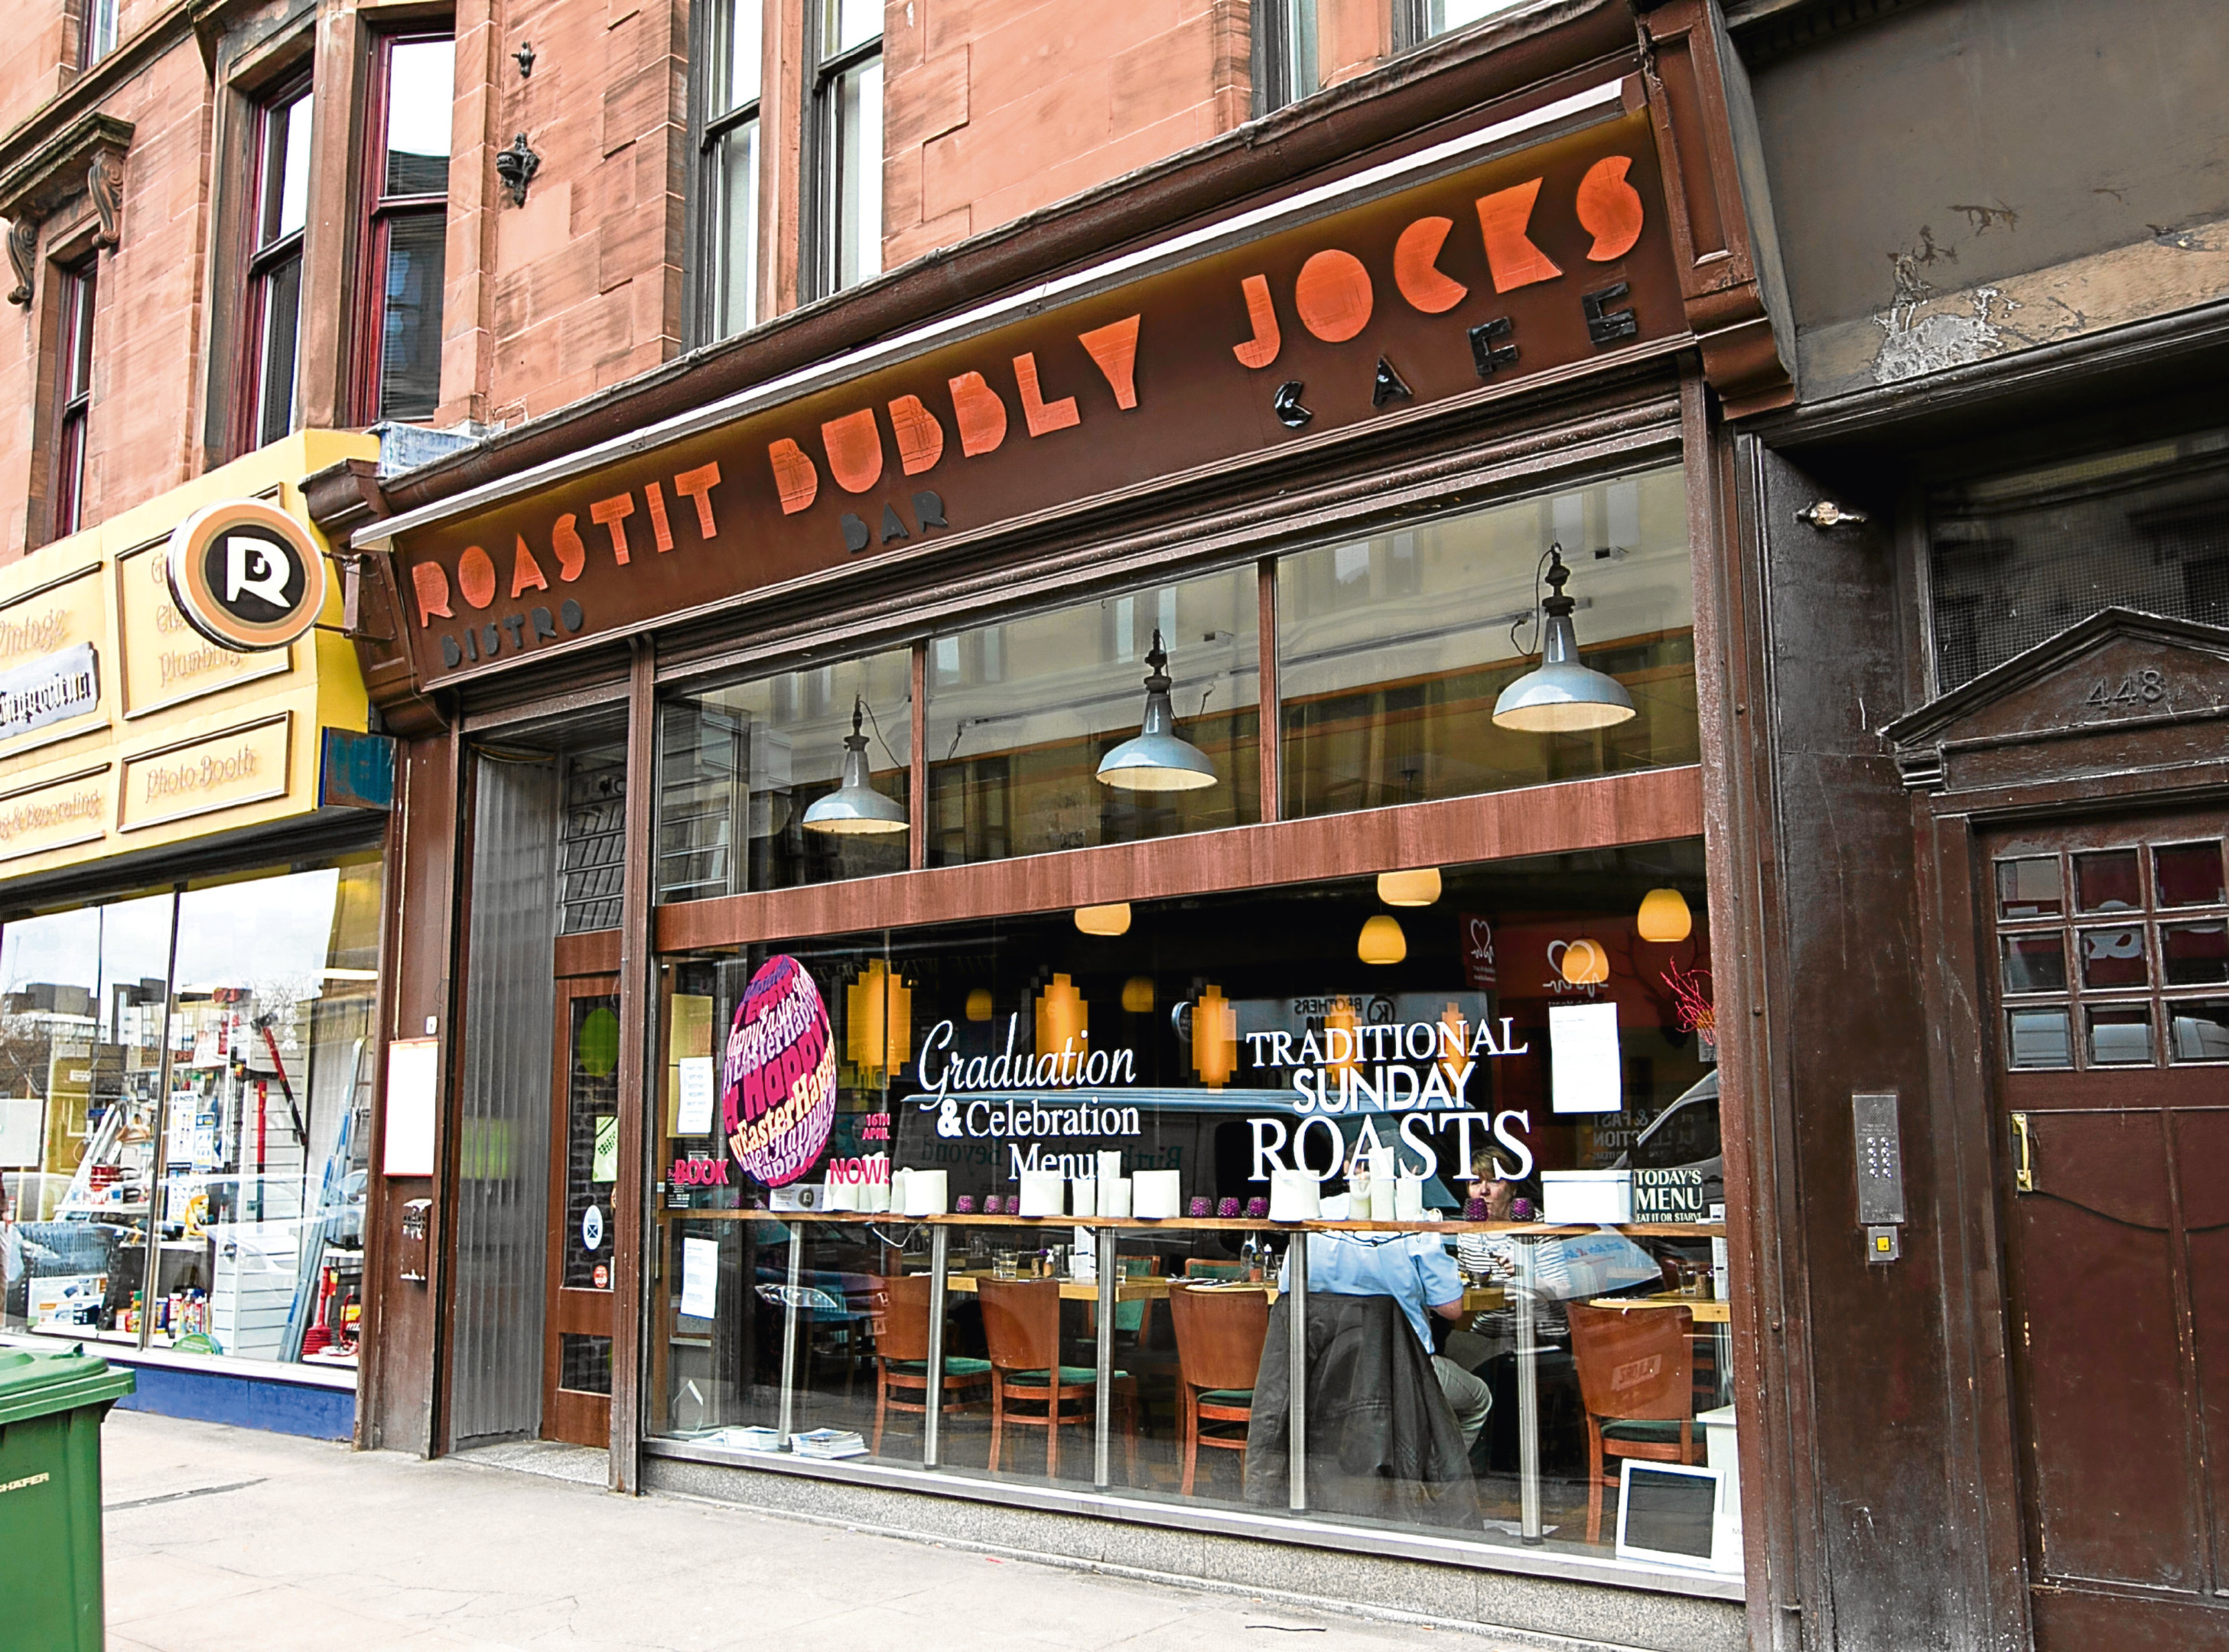 Roastit Bubbly Jocks, Glasgow (Andrew Cawley)